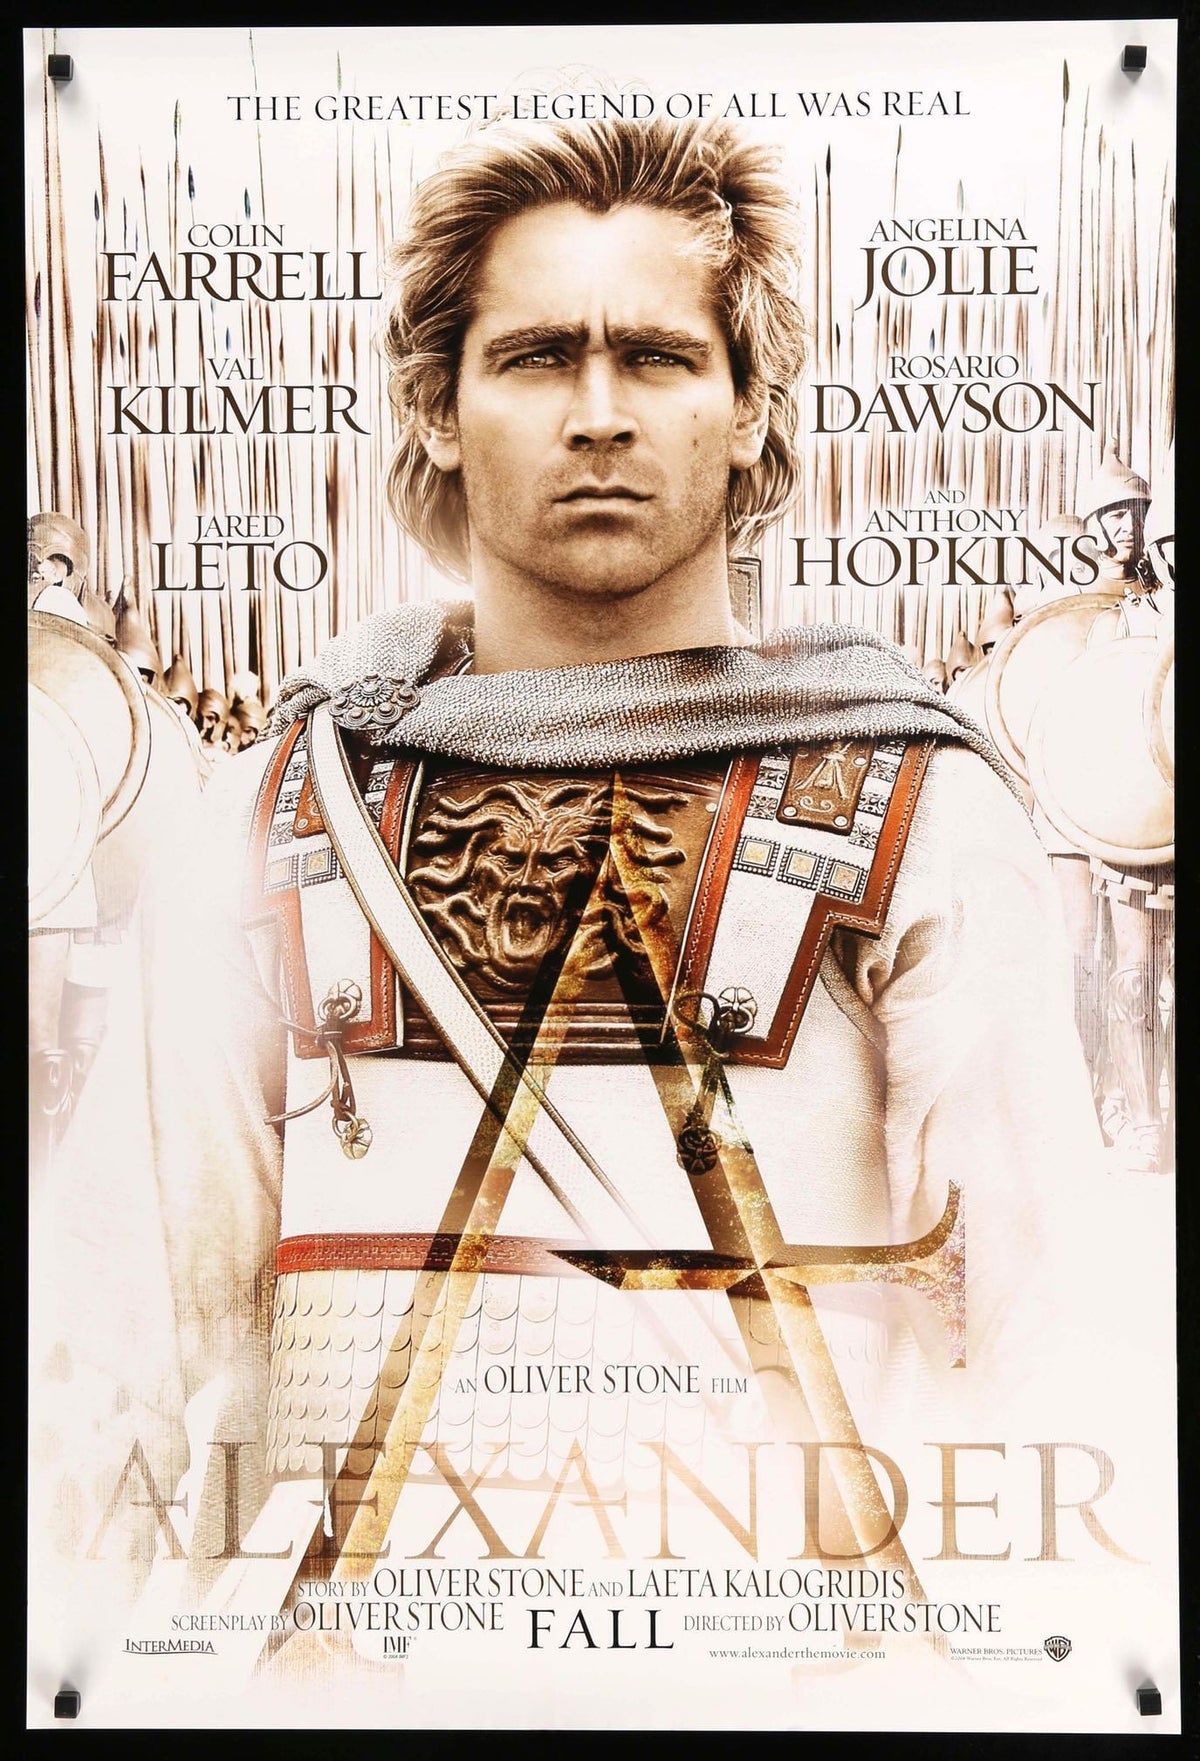 Alexander (2004) original movie poster for sale at Original Film Art